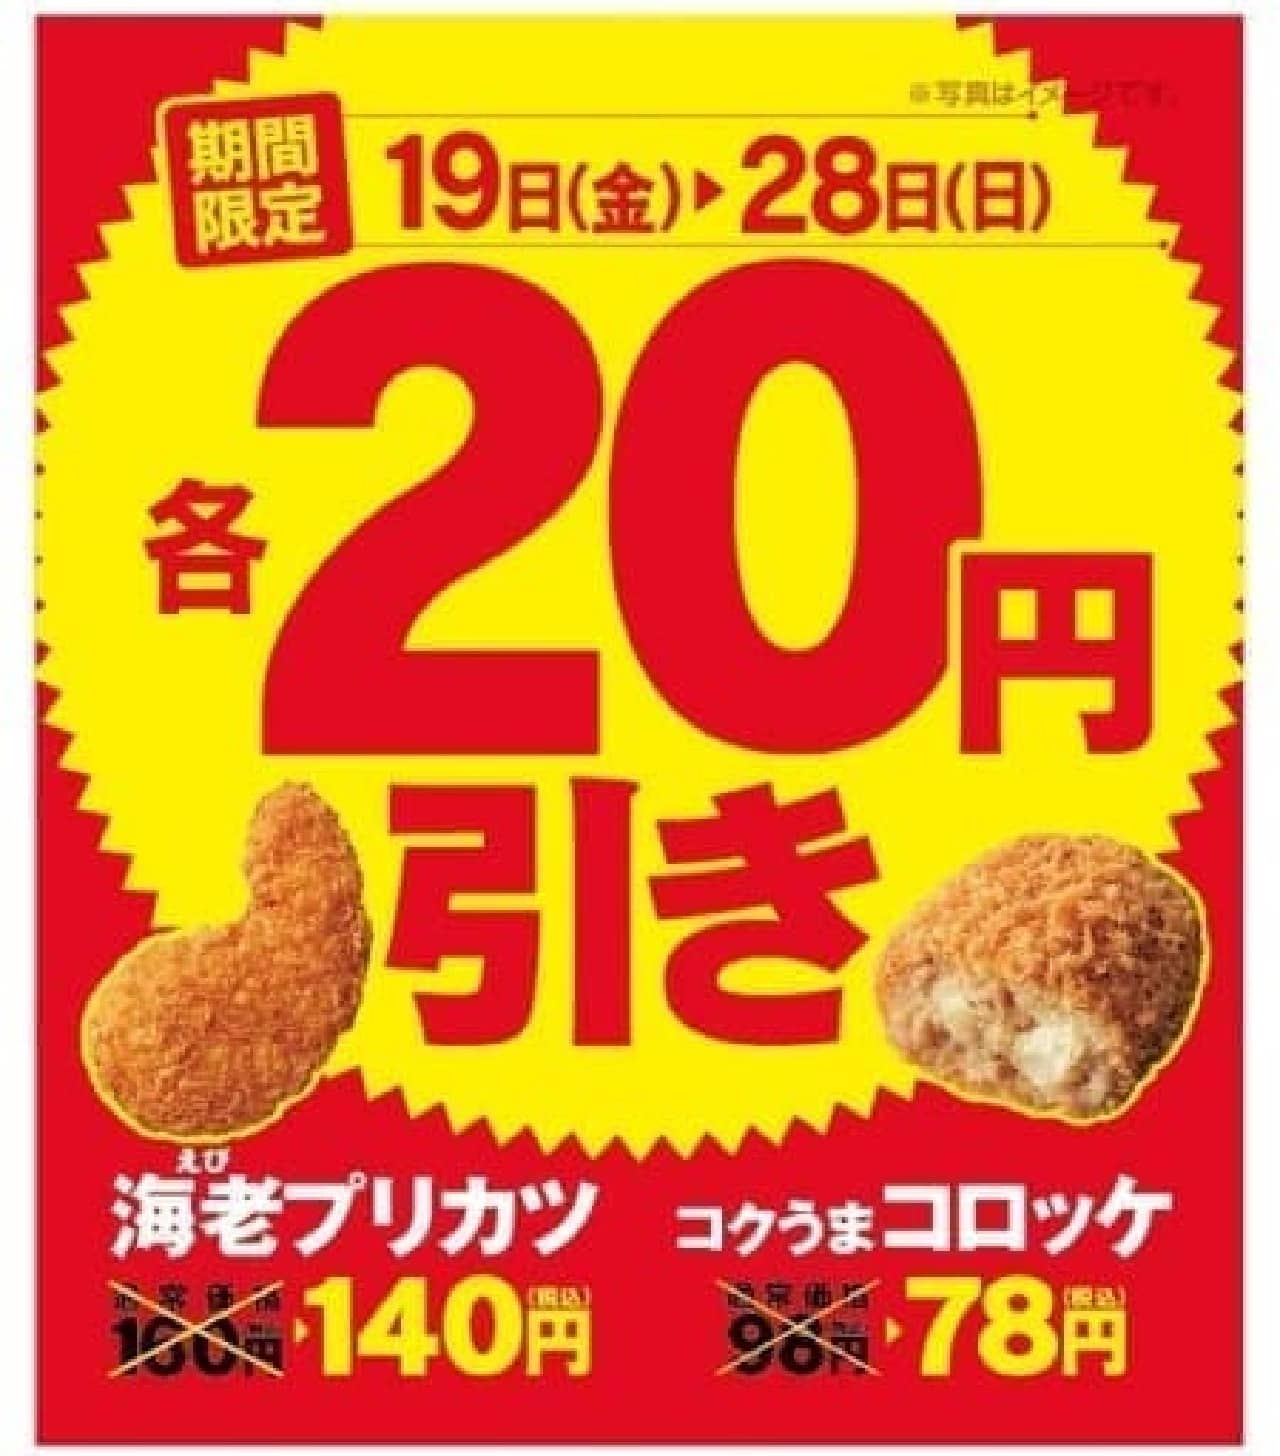 Ministop 20 yen sale